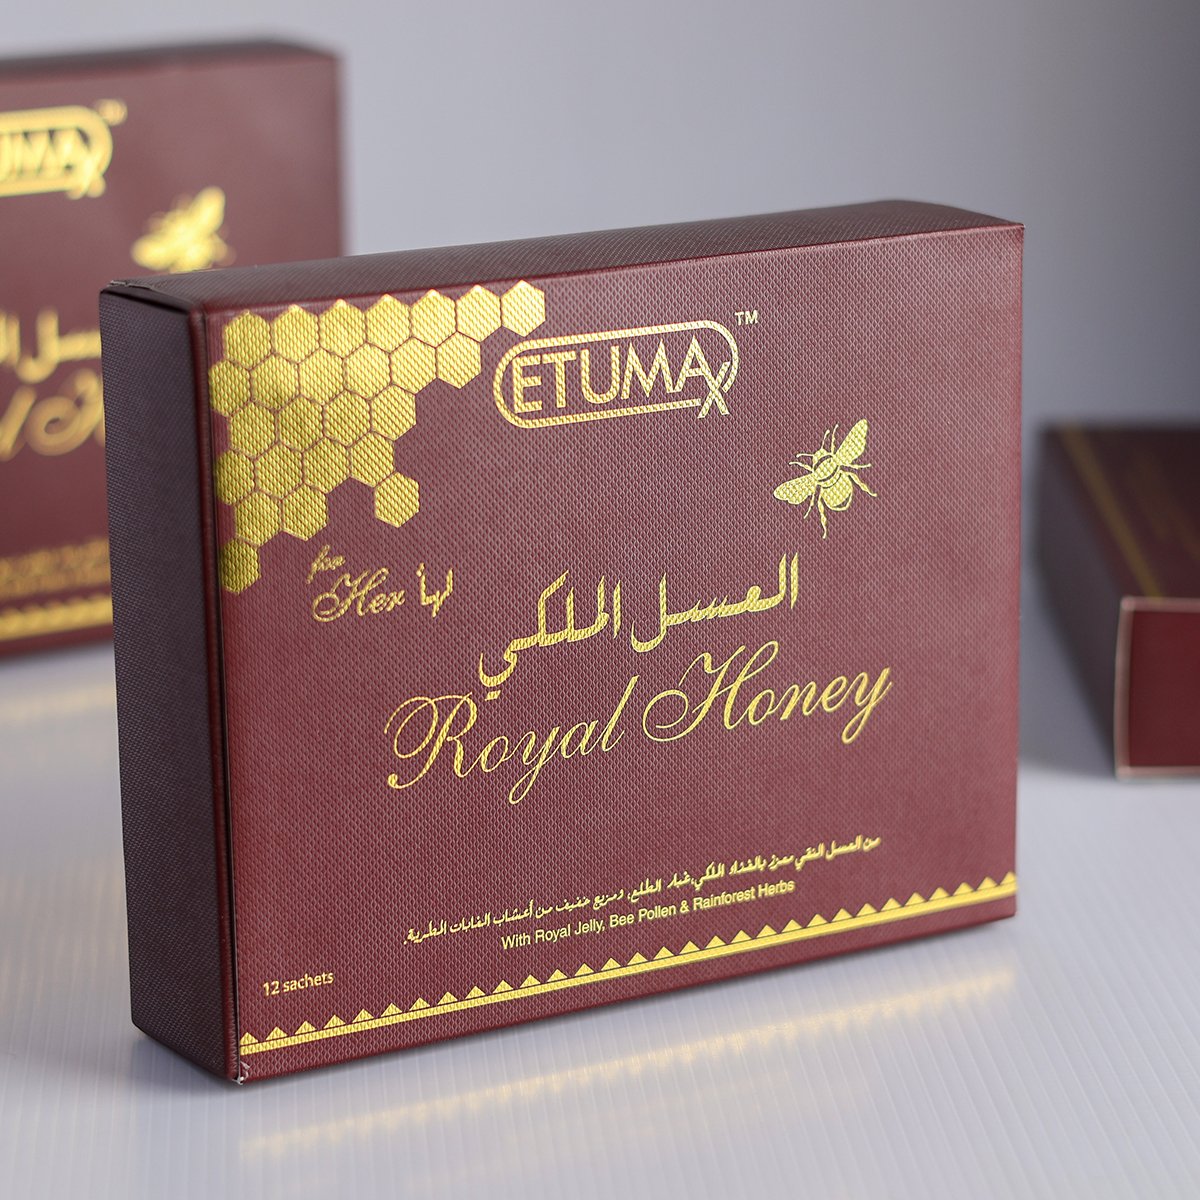 Etumax royal honey for her Malaysia